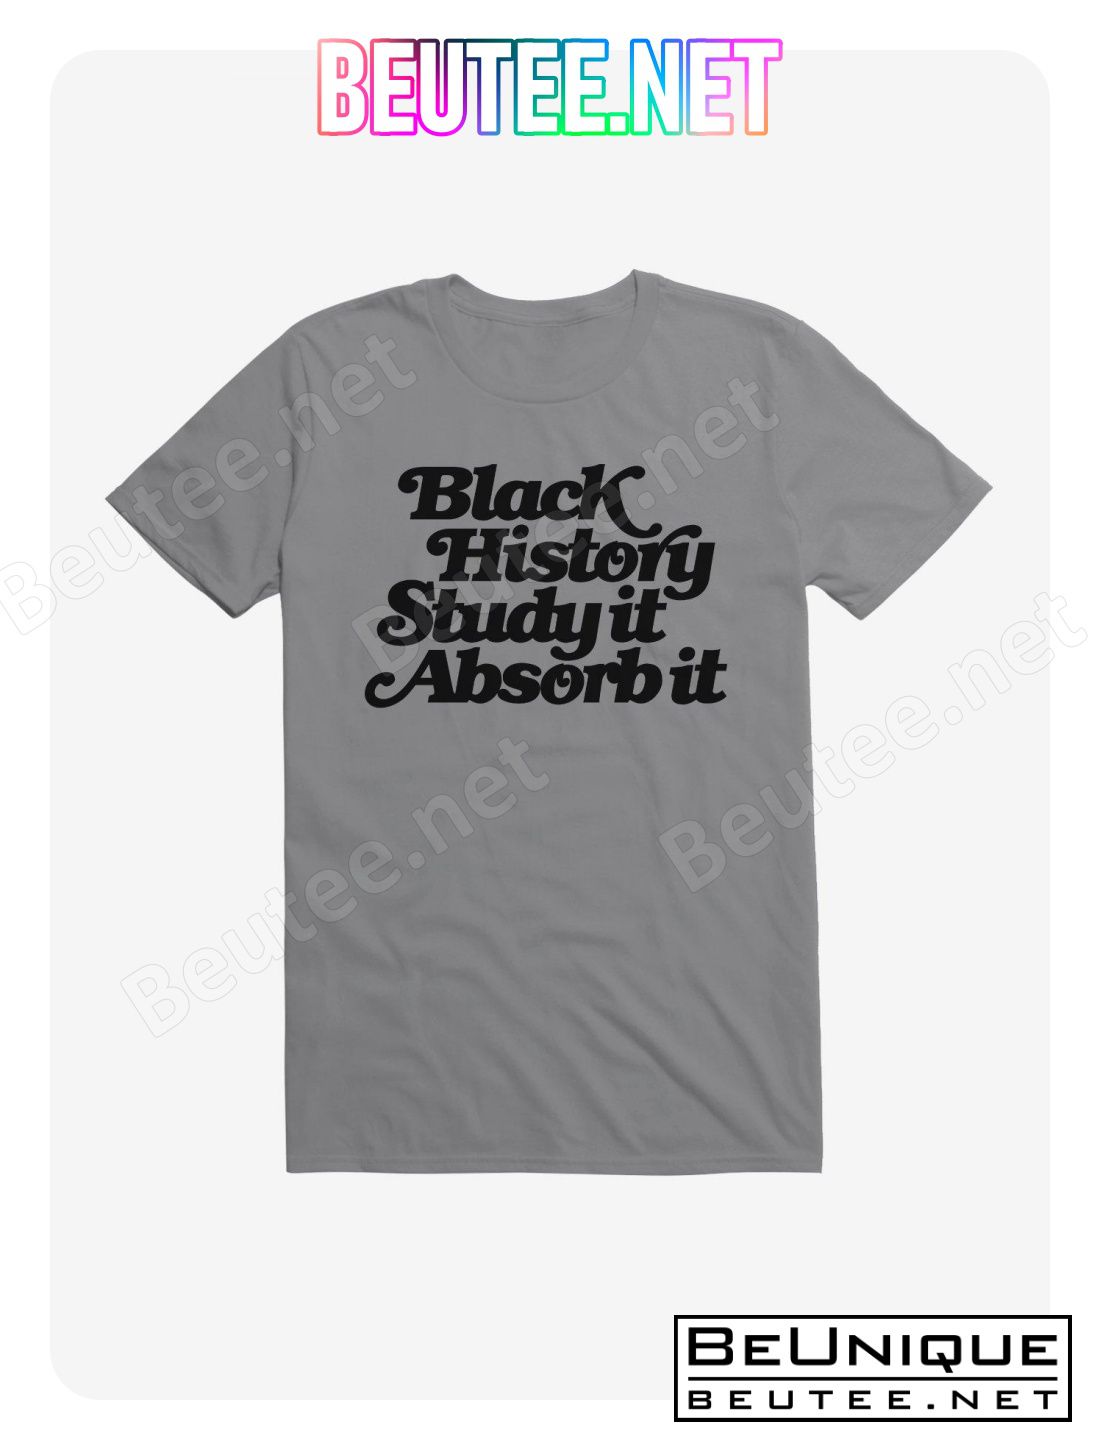 Black History Month Study It Absorb It T-Shirt